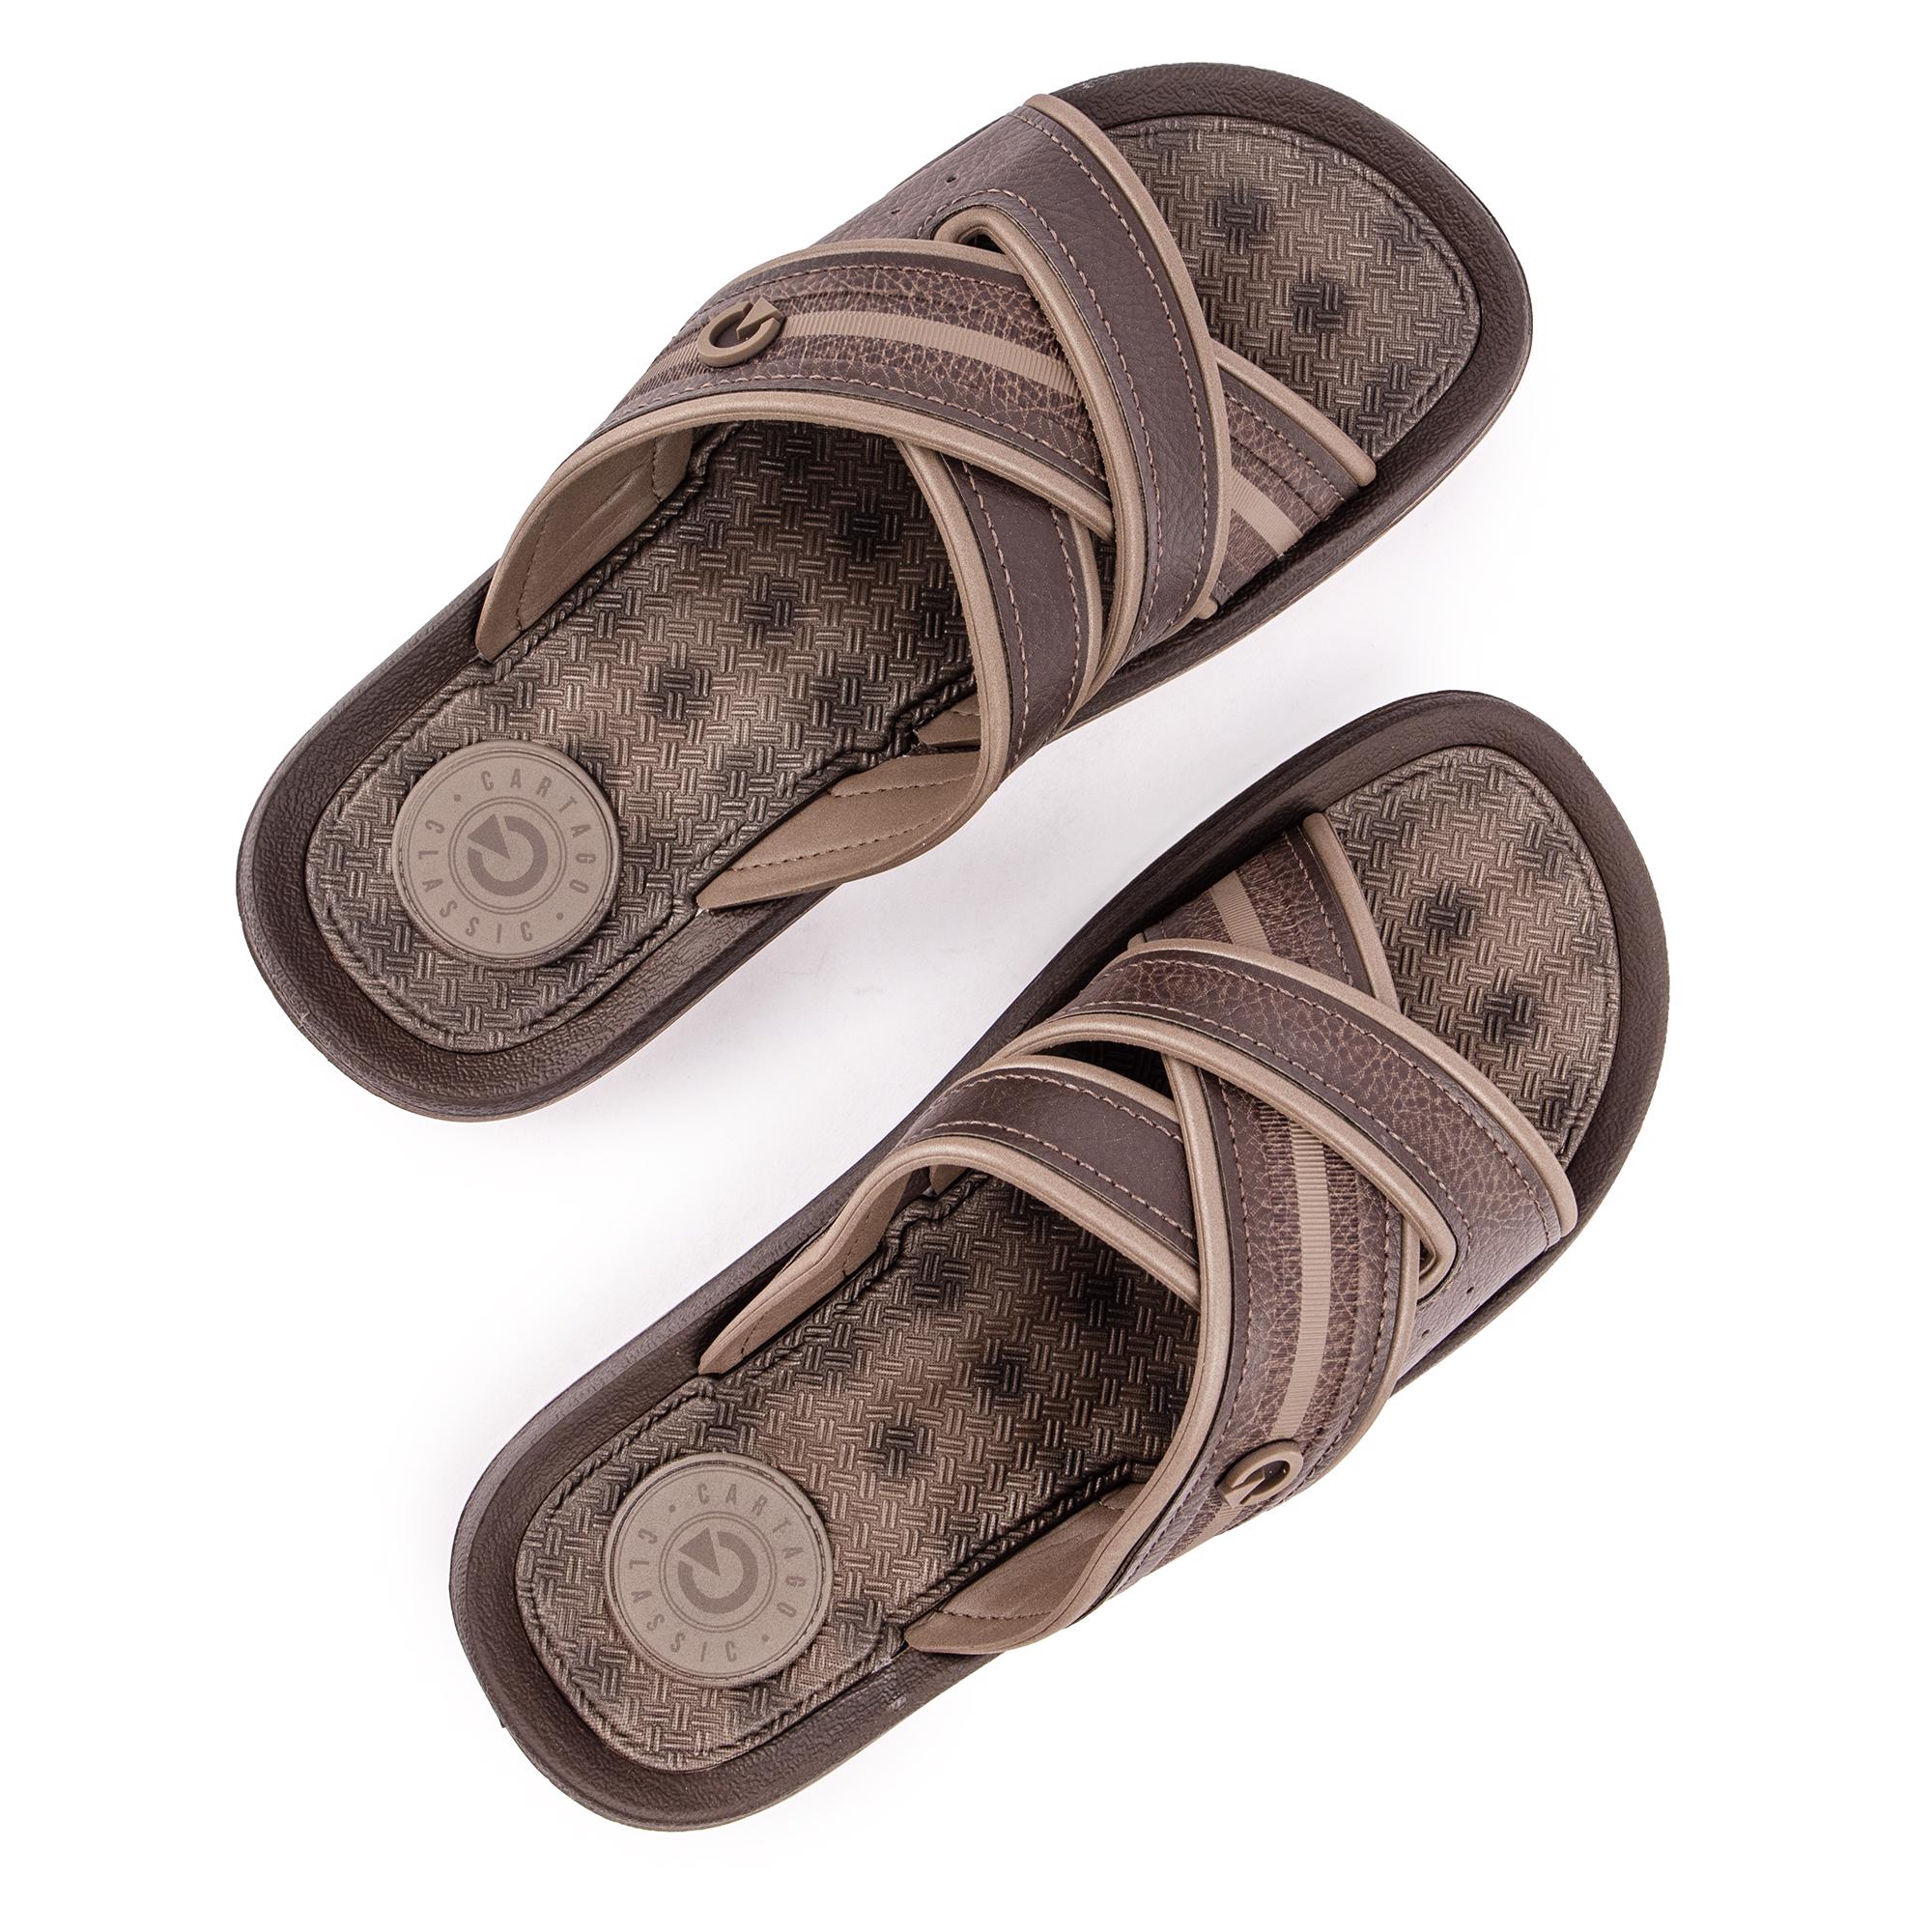 Share 245+ cartago sandals review best